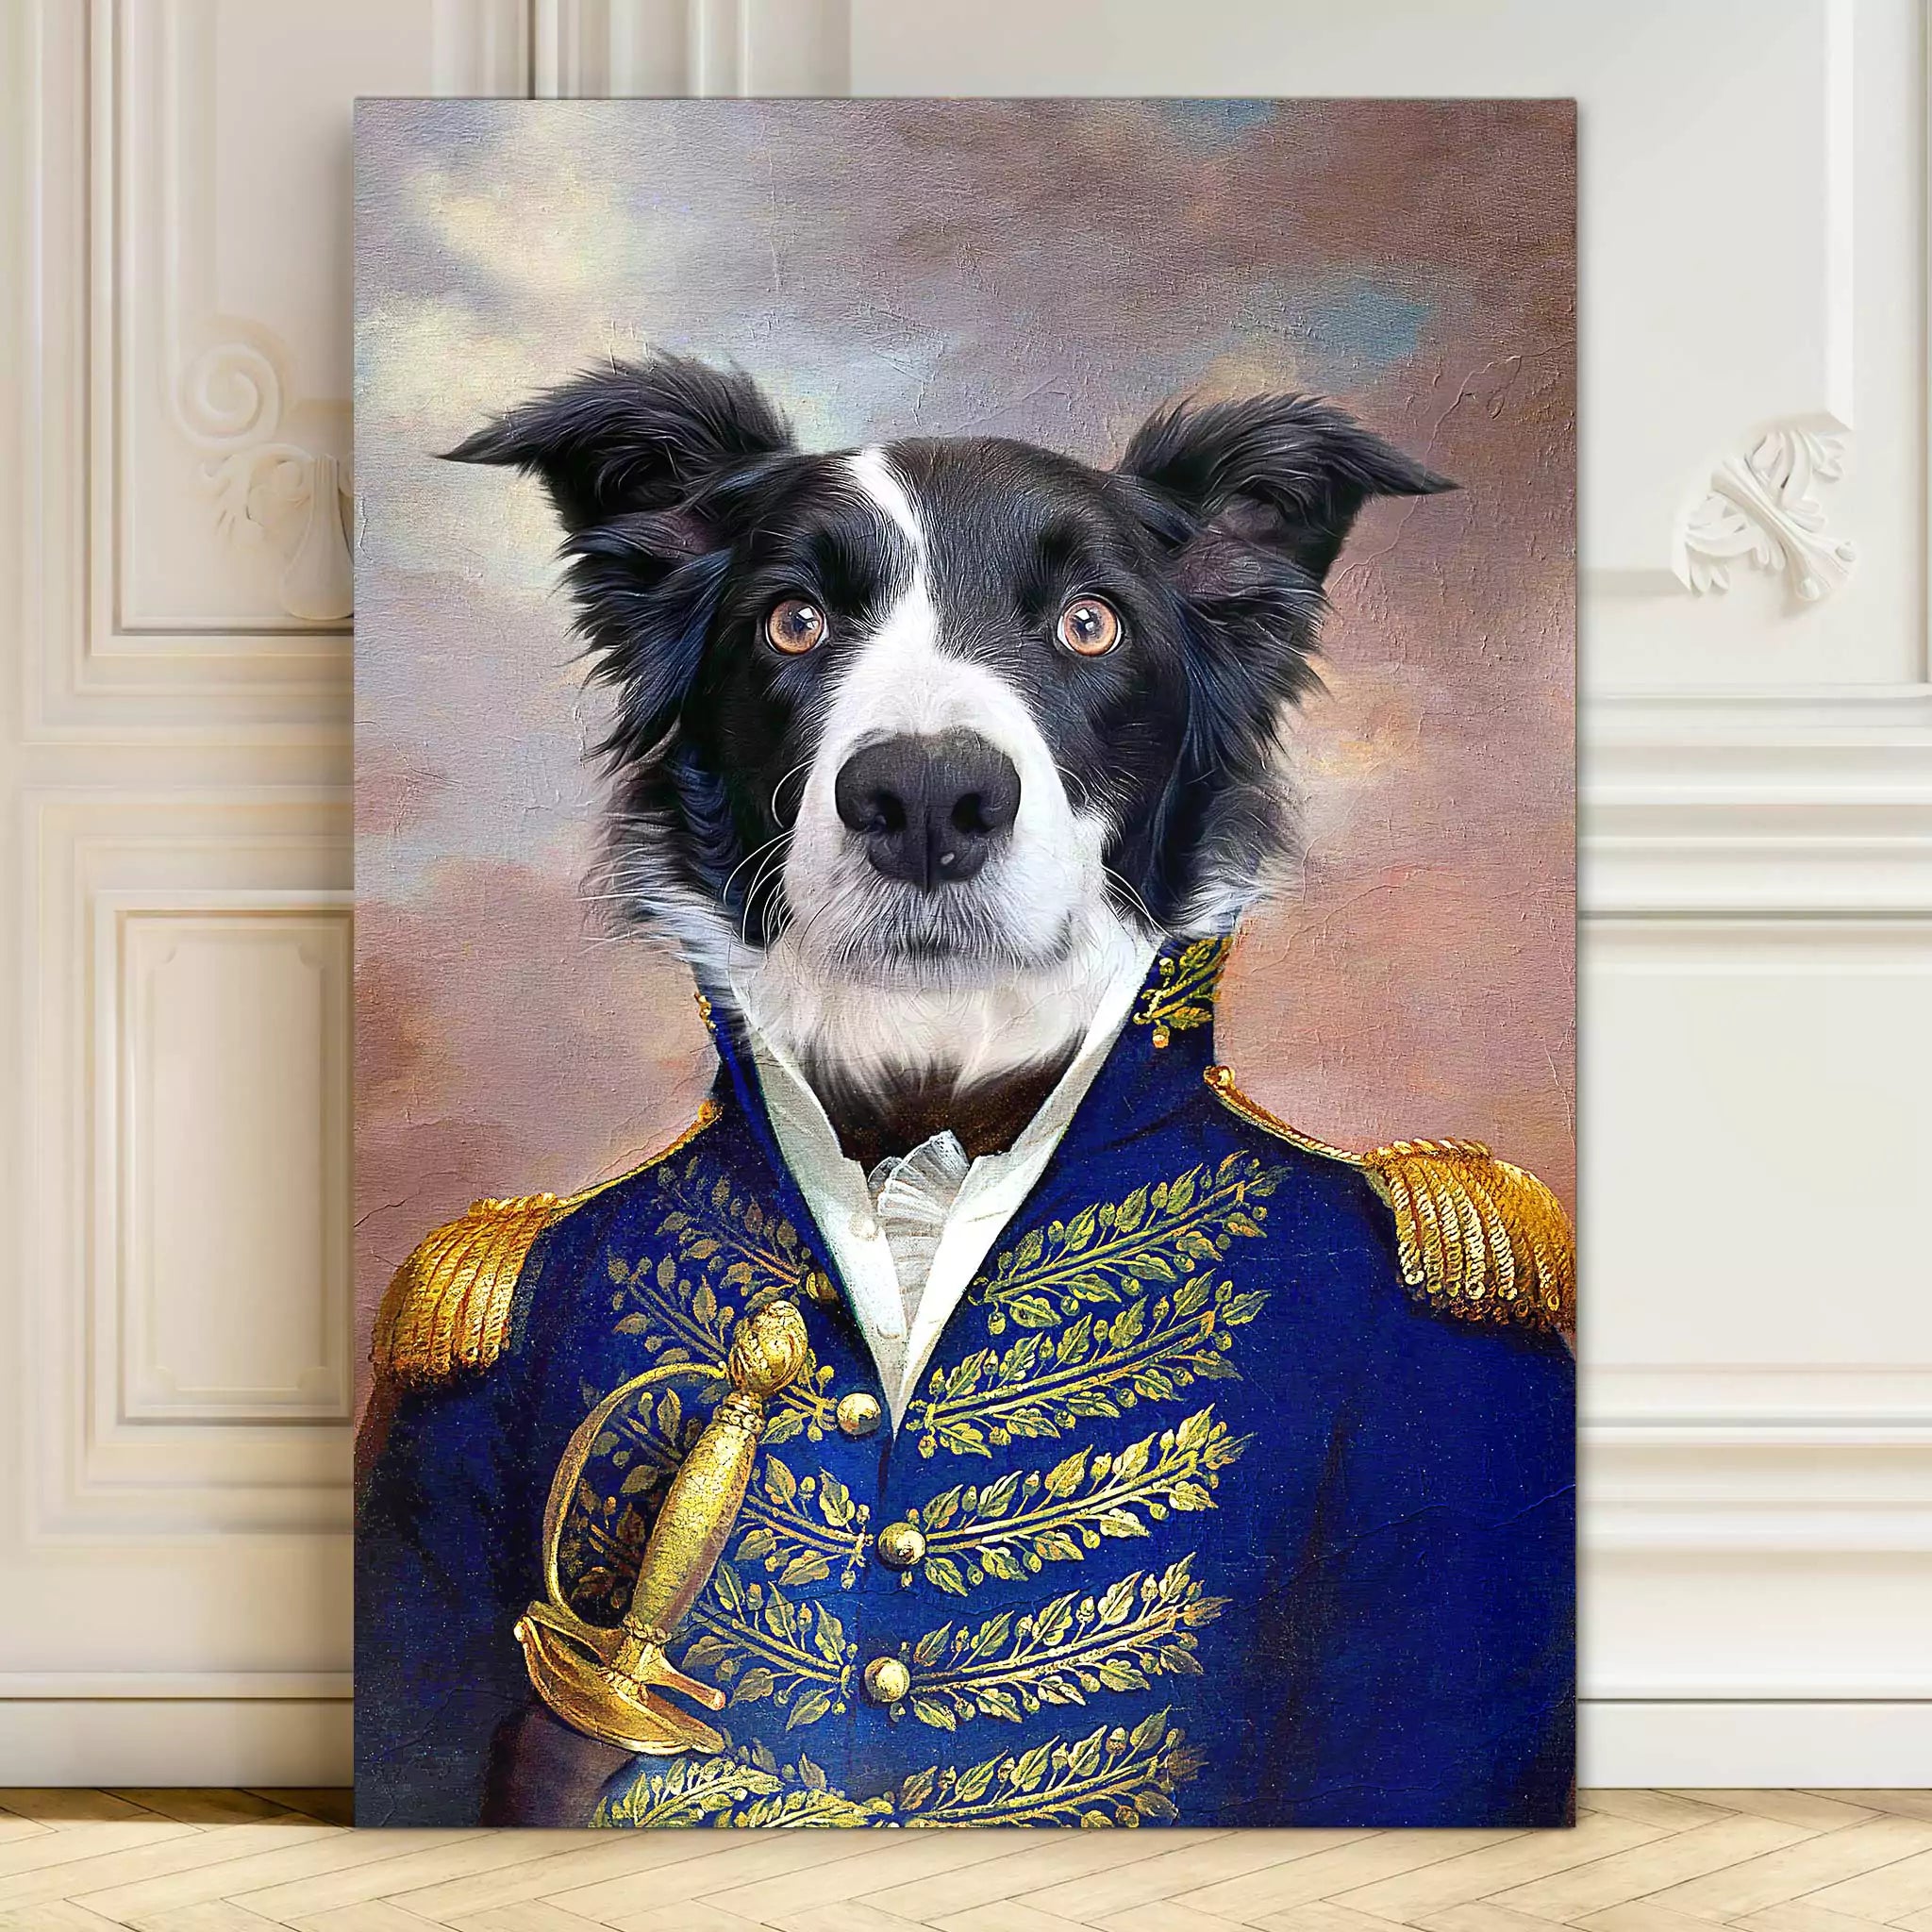 general dog portrait, admiral dog print, custom dog portrait, dogs potrait, dog portrait art